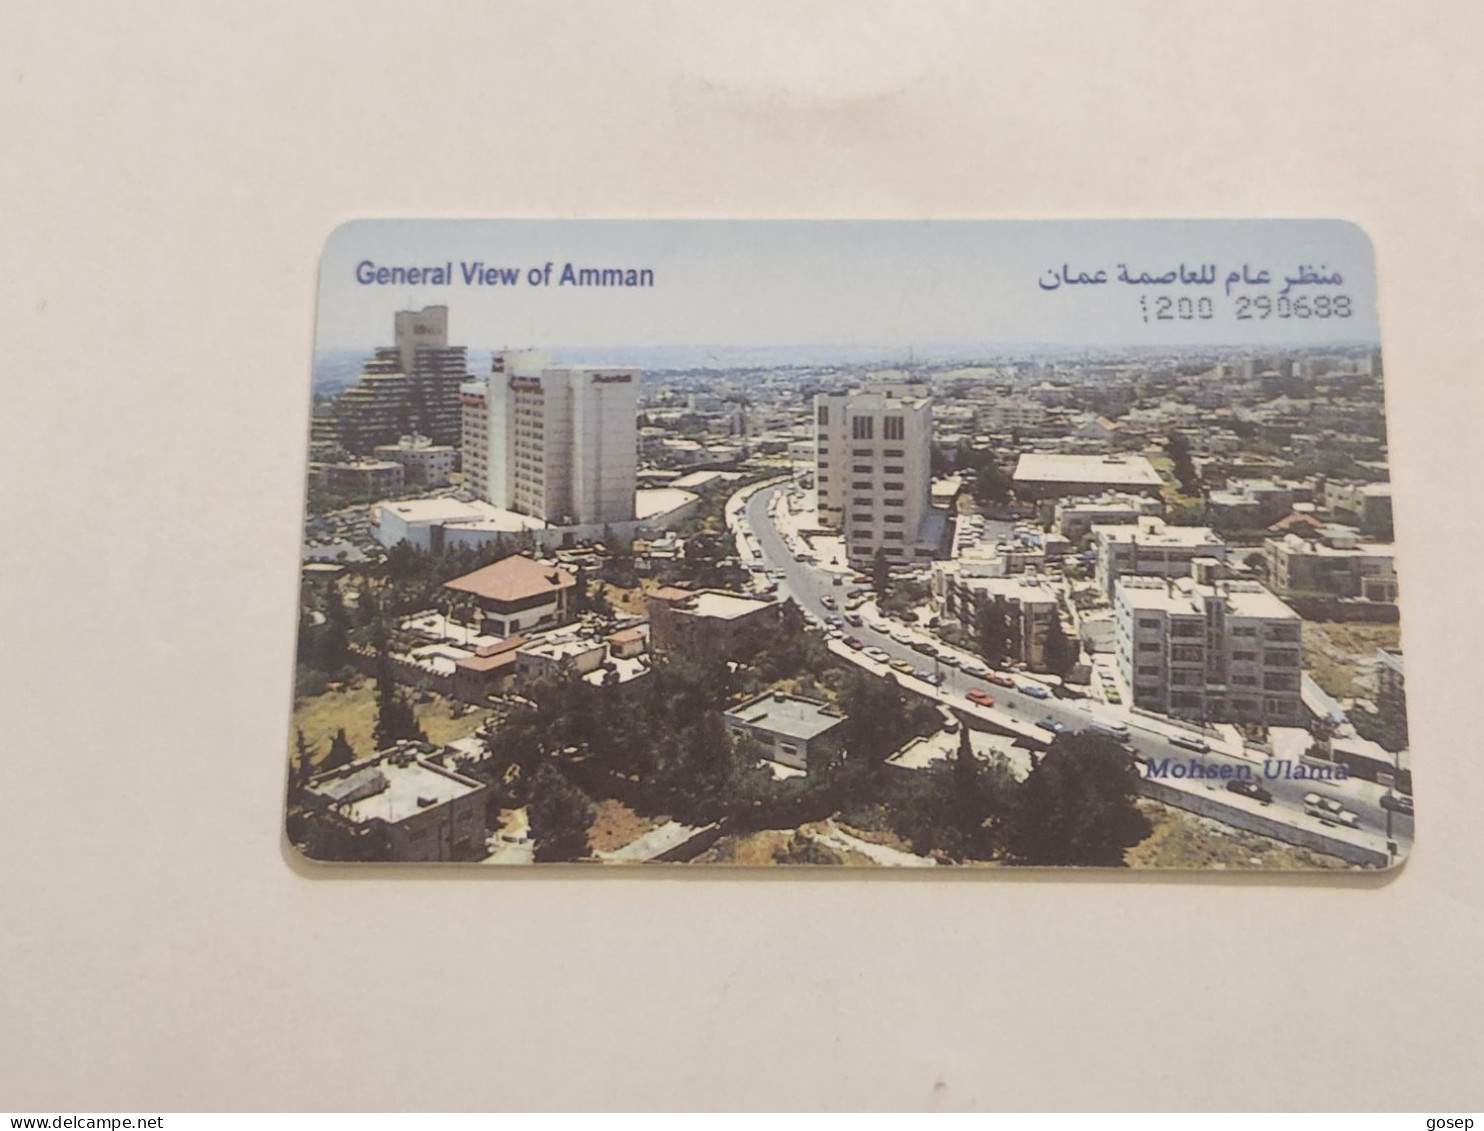 JORDAN-(JO-ALO-0028)-King Abdullah Mosque-(128)-(1200-290688)-(15JD)-(9/2000)-used Card+1card Prepiad Free - Jordania